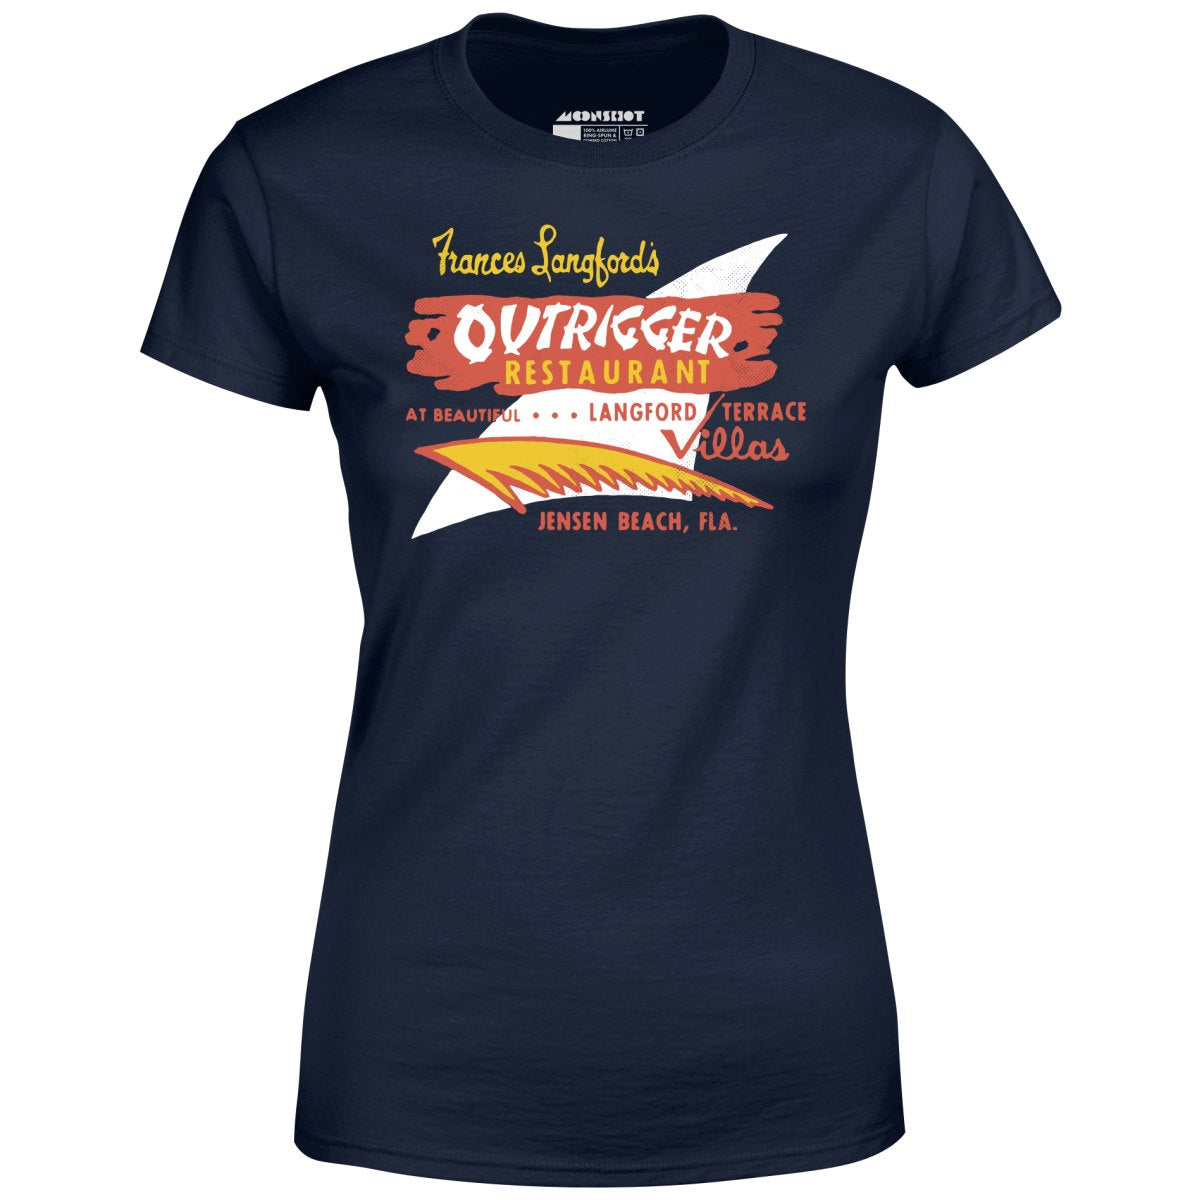 Frances Langford's Outrigger - Jensen Beach, FL - Vintage Tiki Bar - Women's T-Shirt